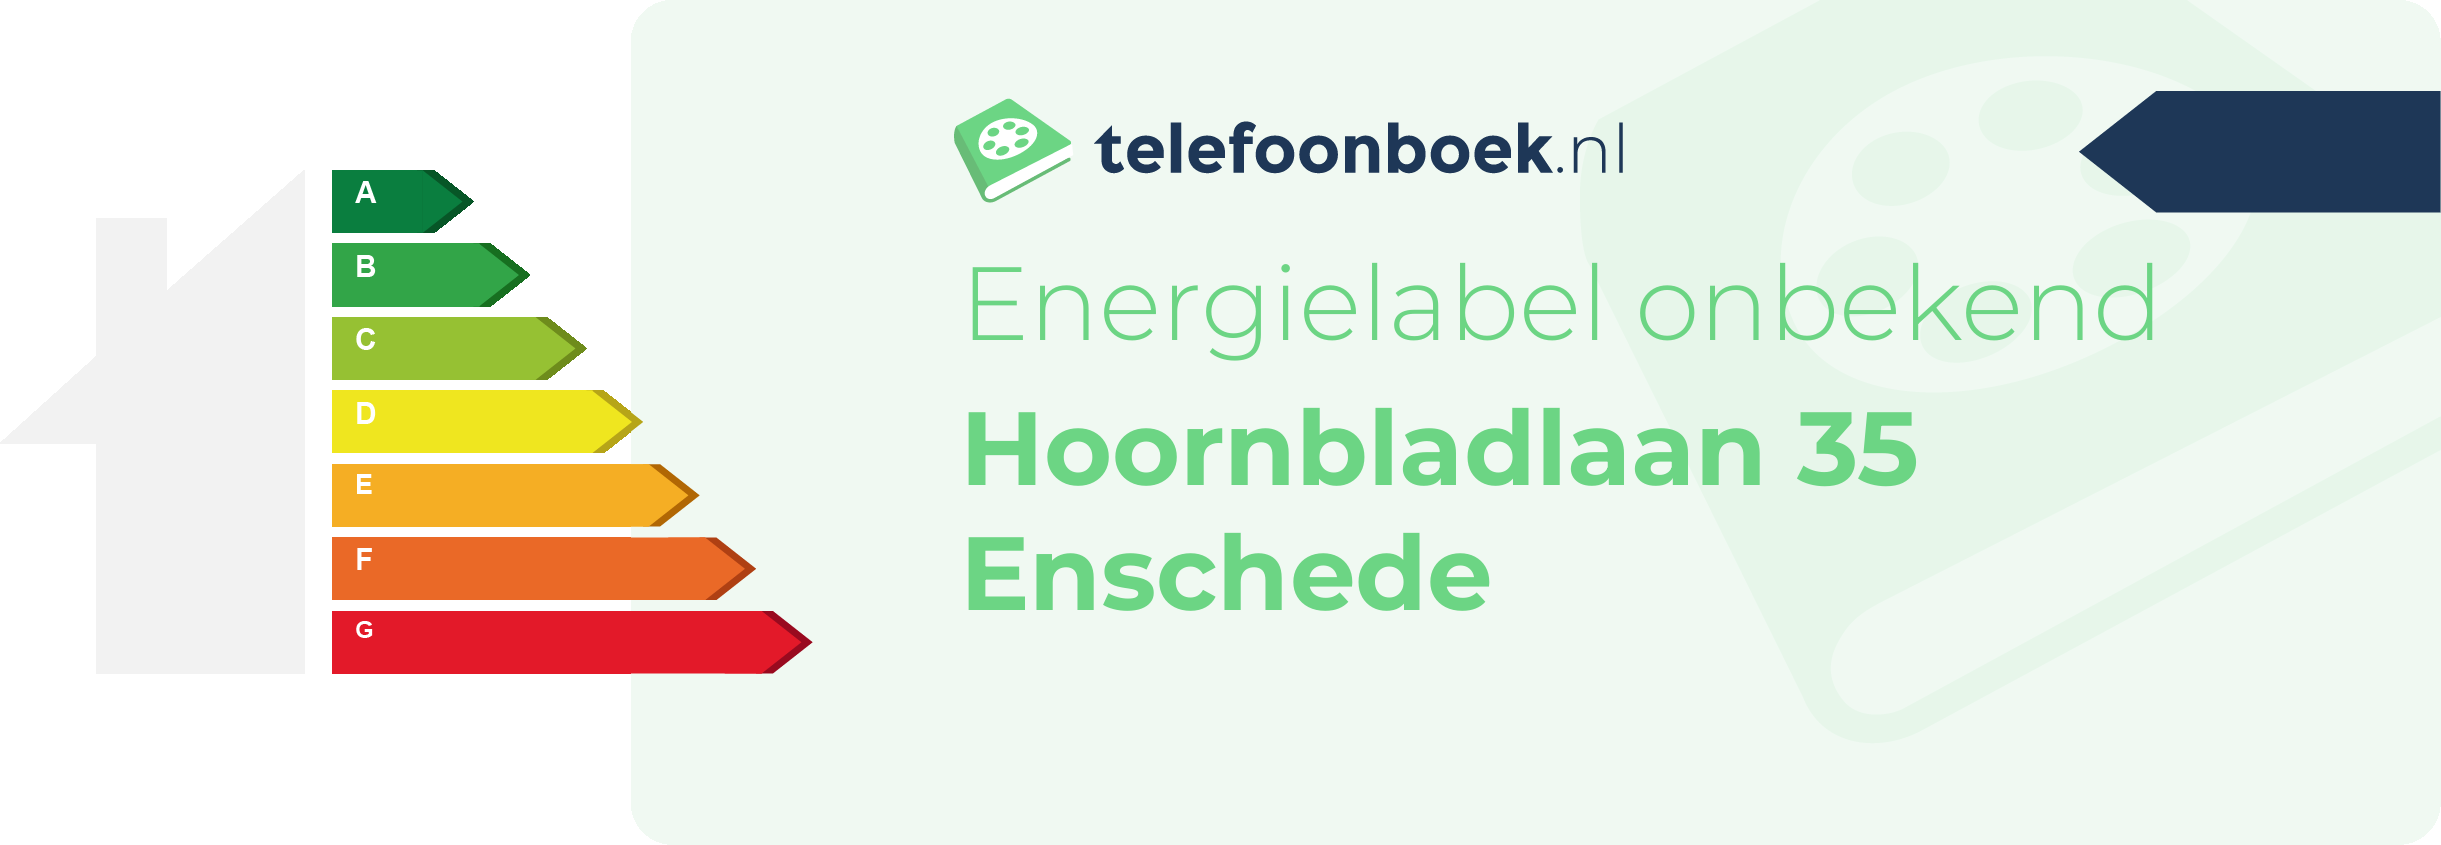 Energielabel Hoornbladlaan 35 Enschede